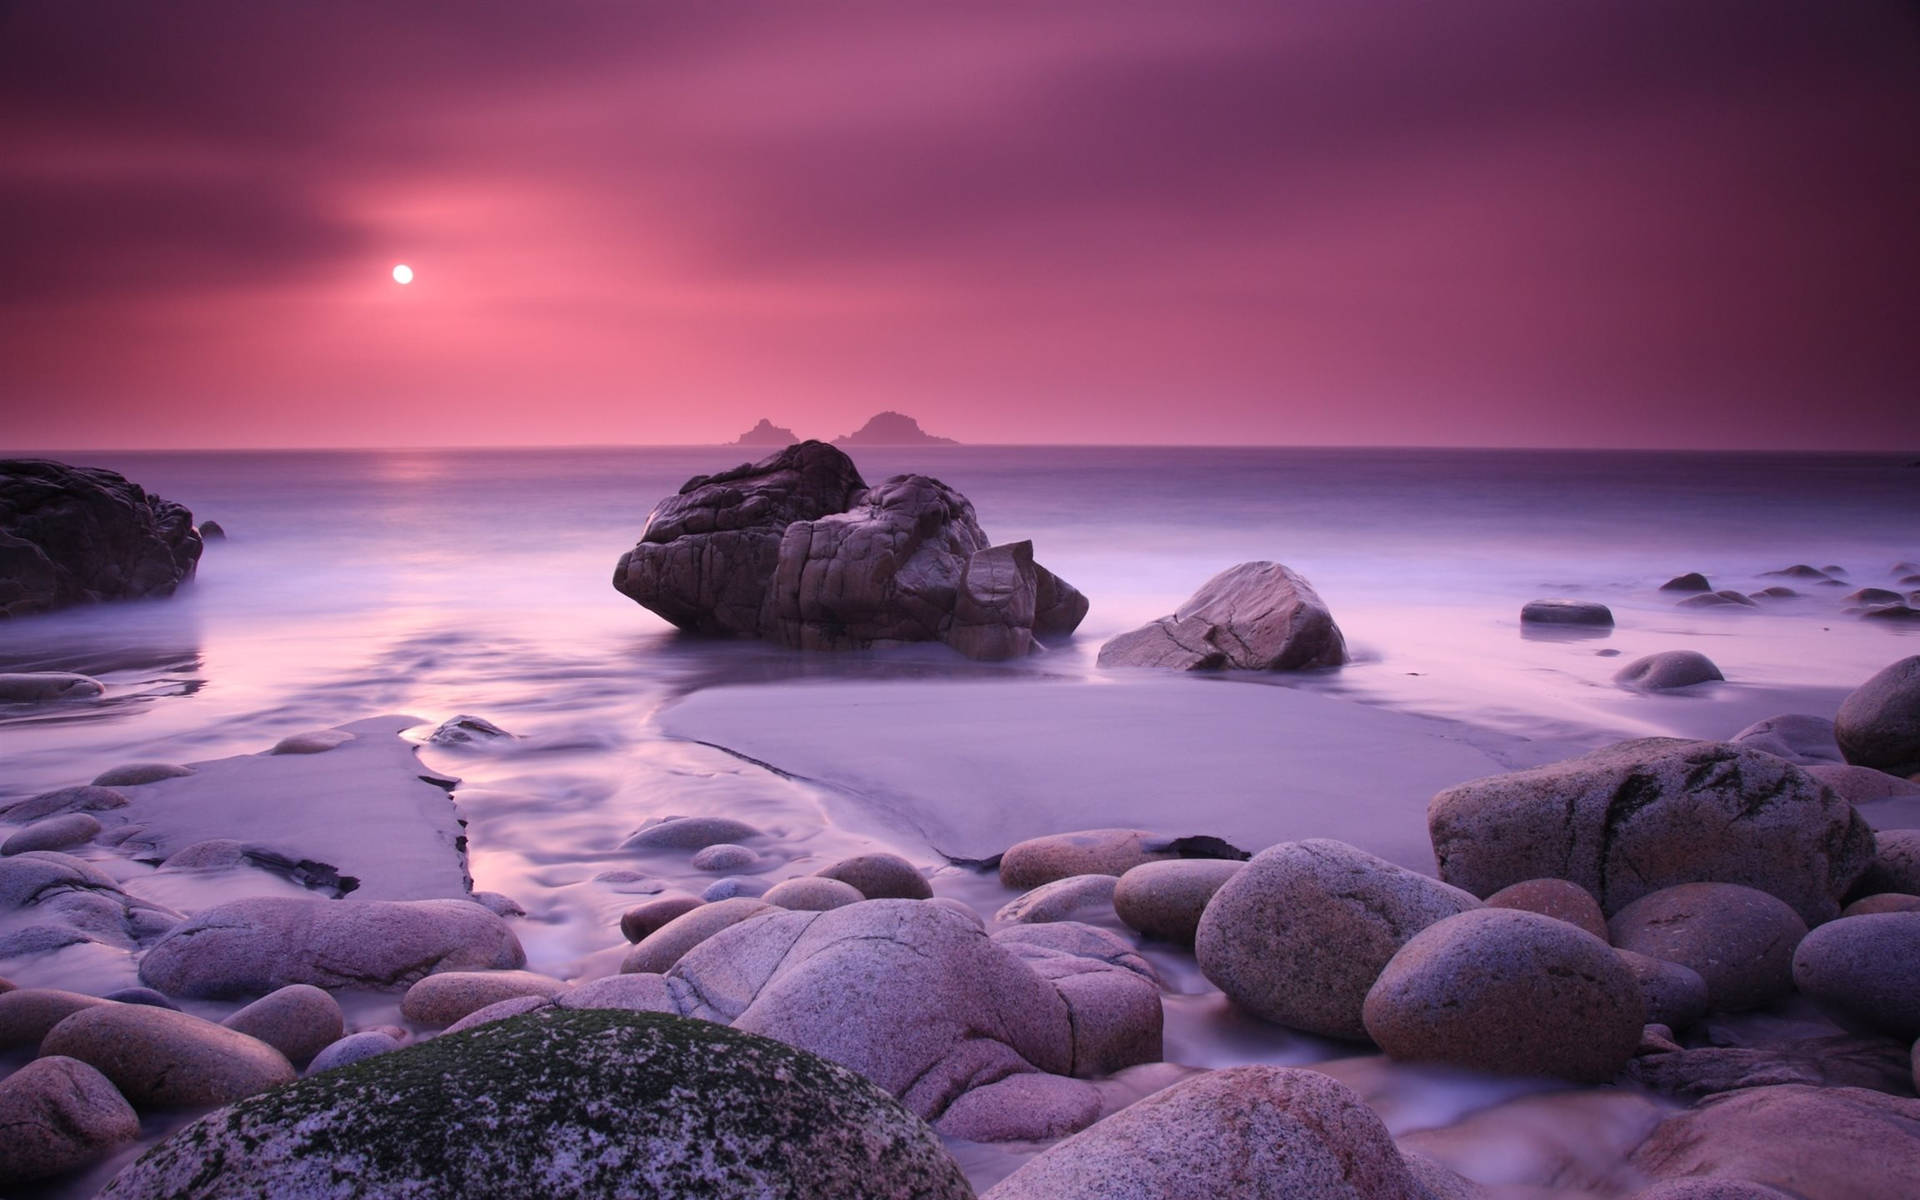 Macbook Pro Pink Shore Scenery Background